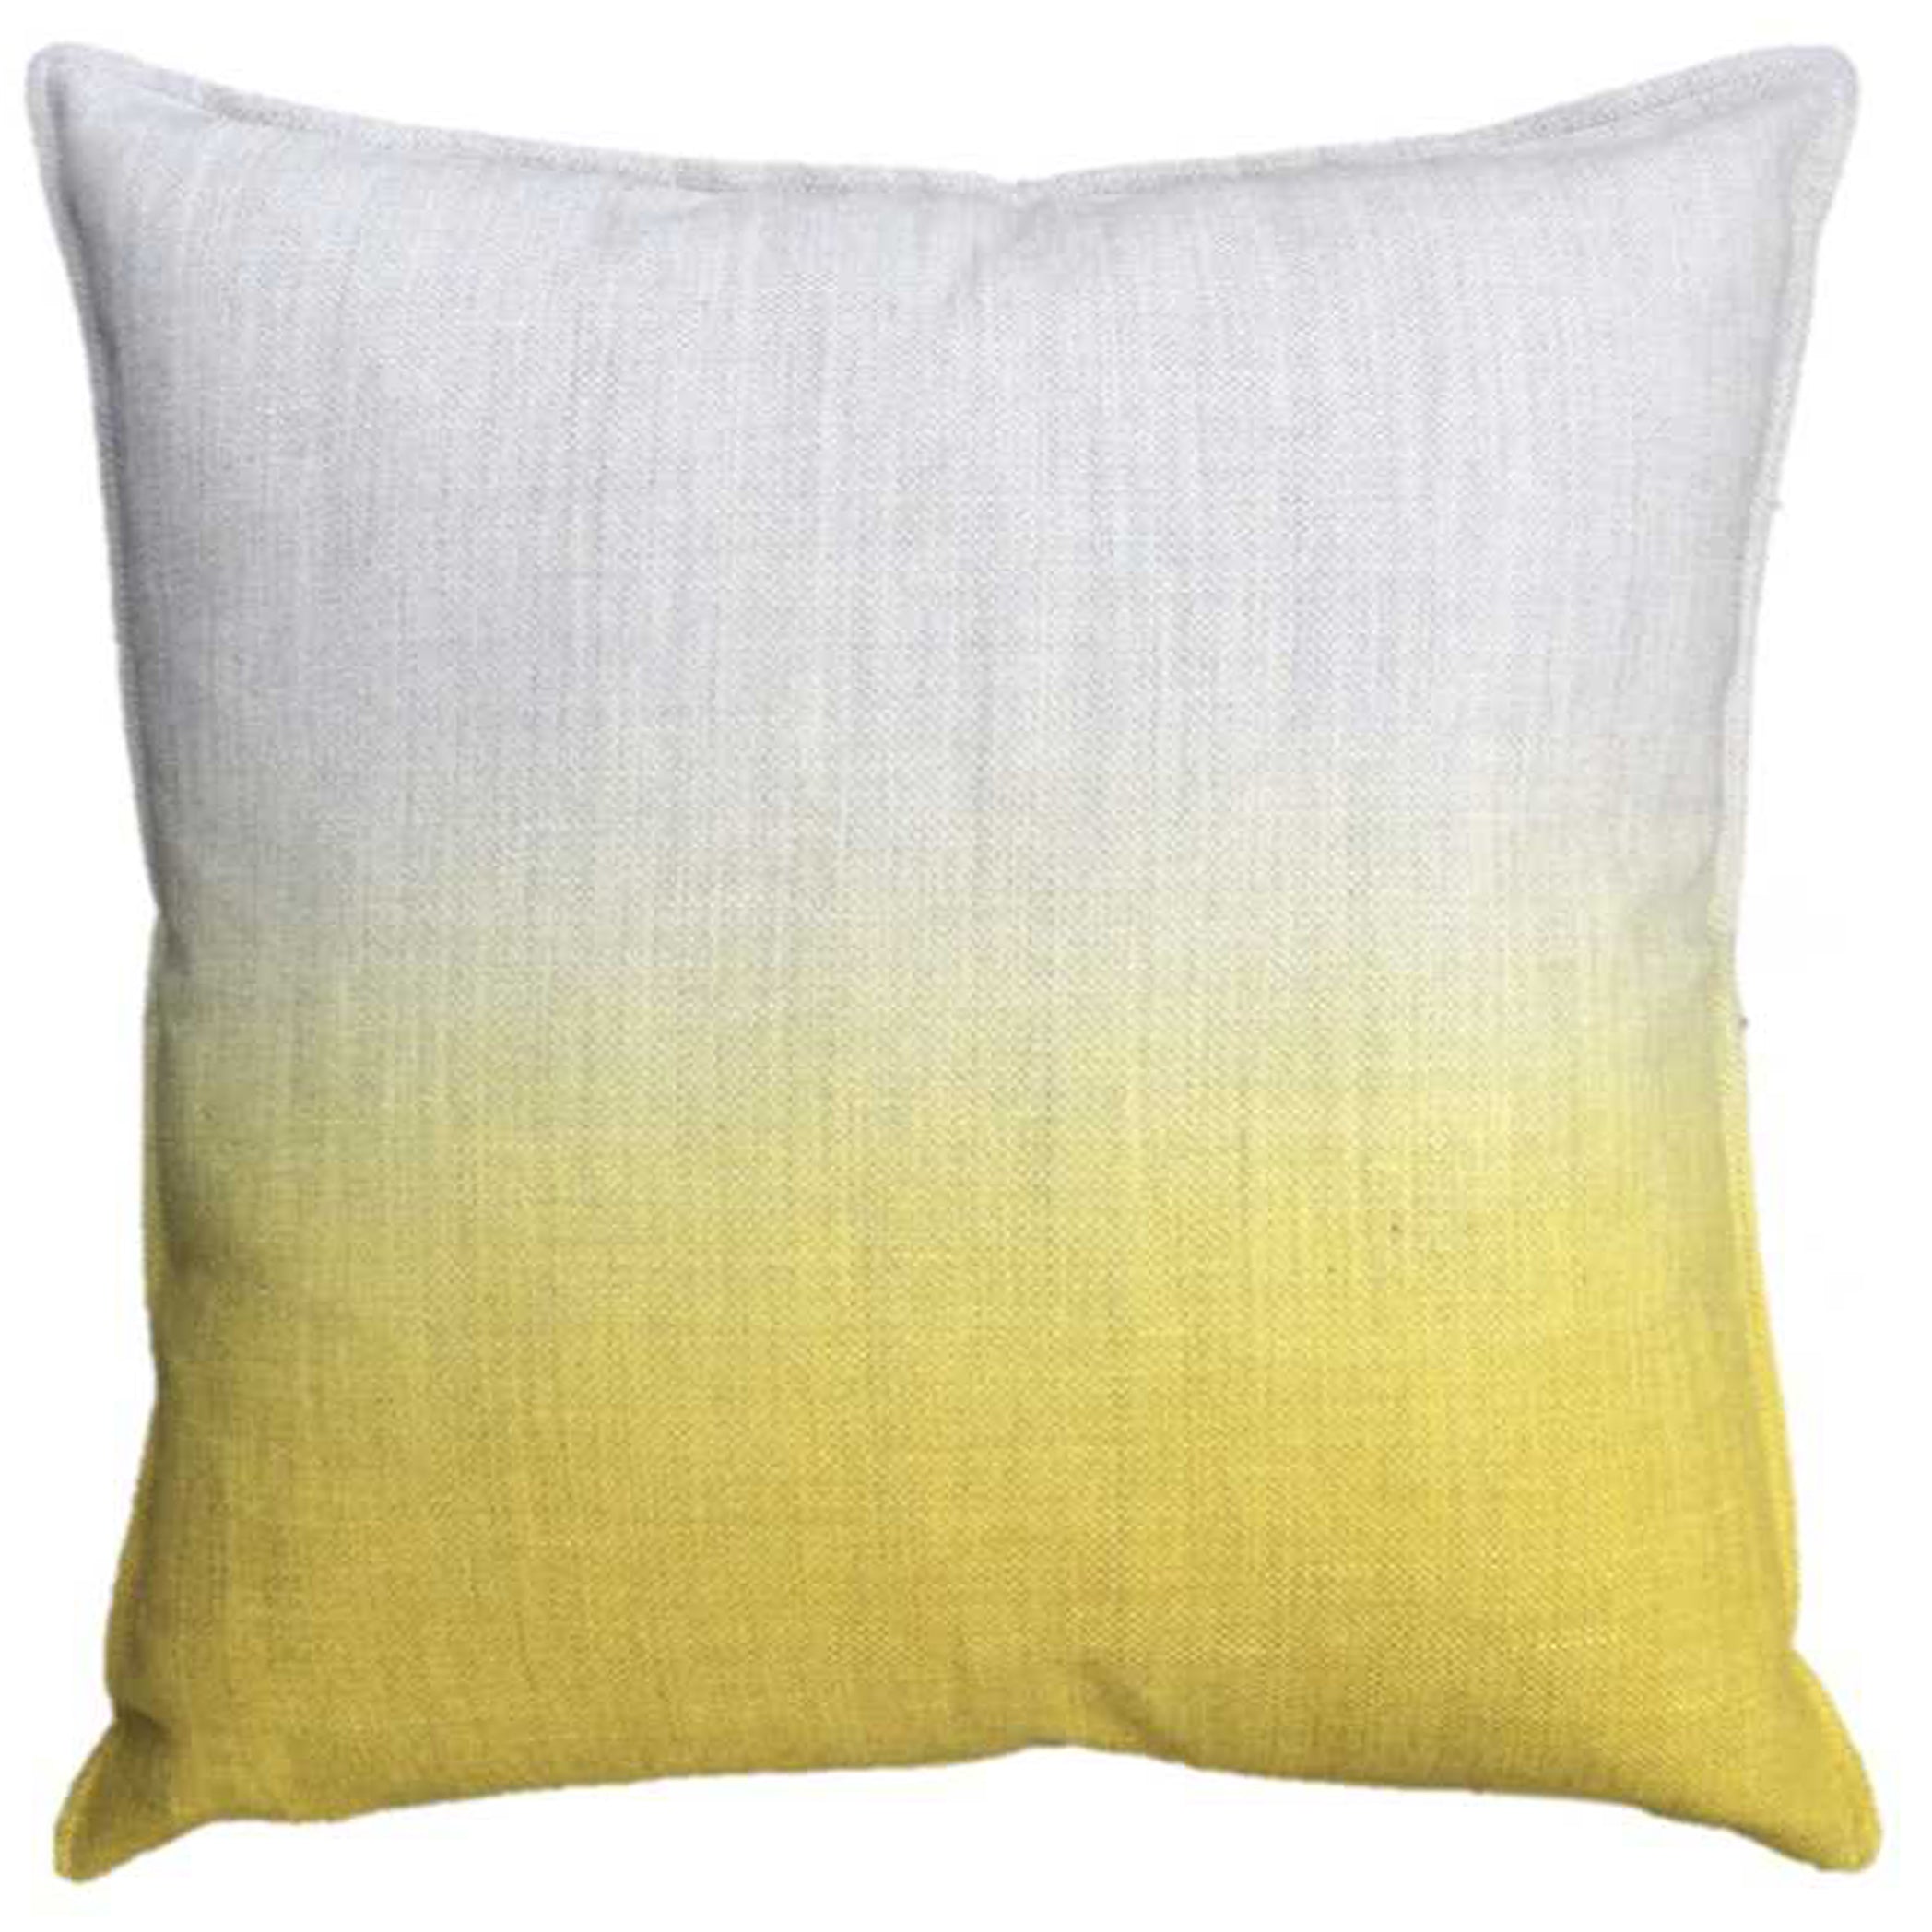 Ombre Alpaca Linen Pillow